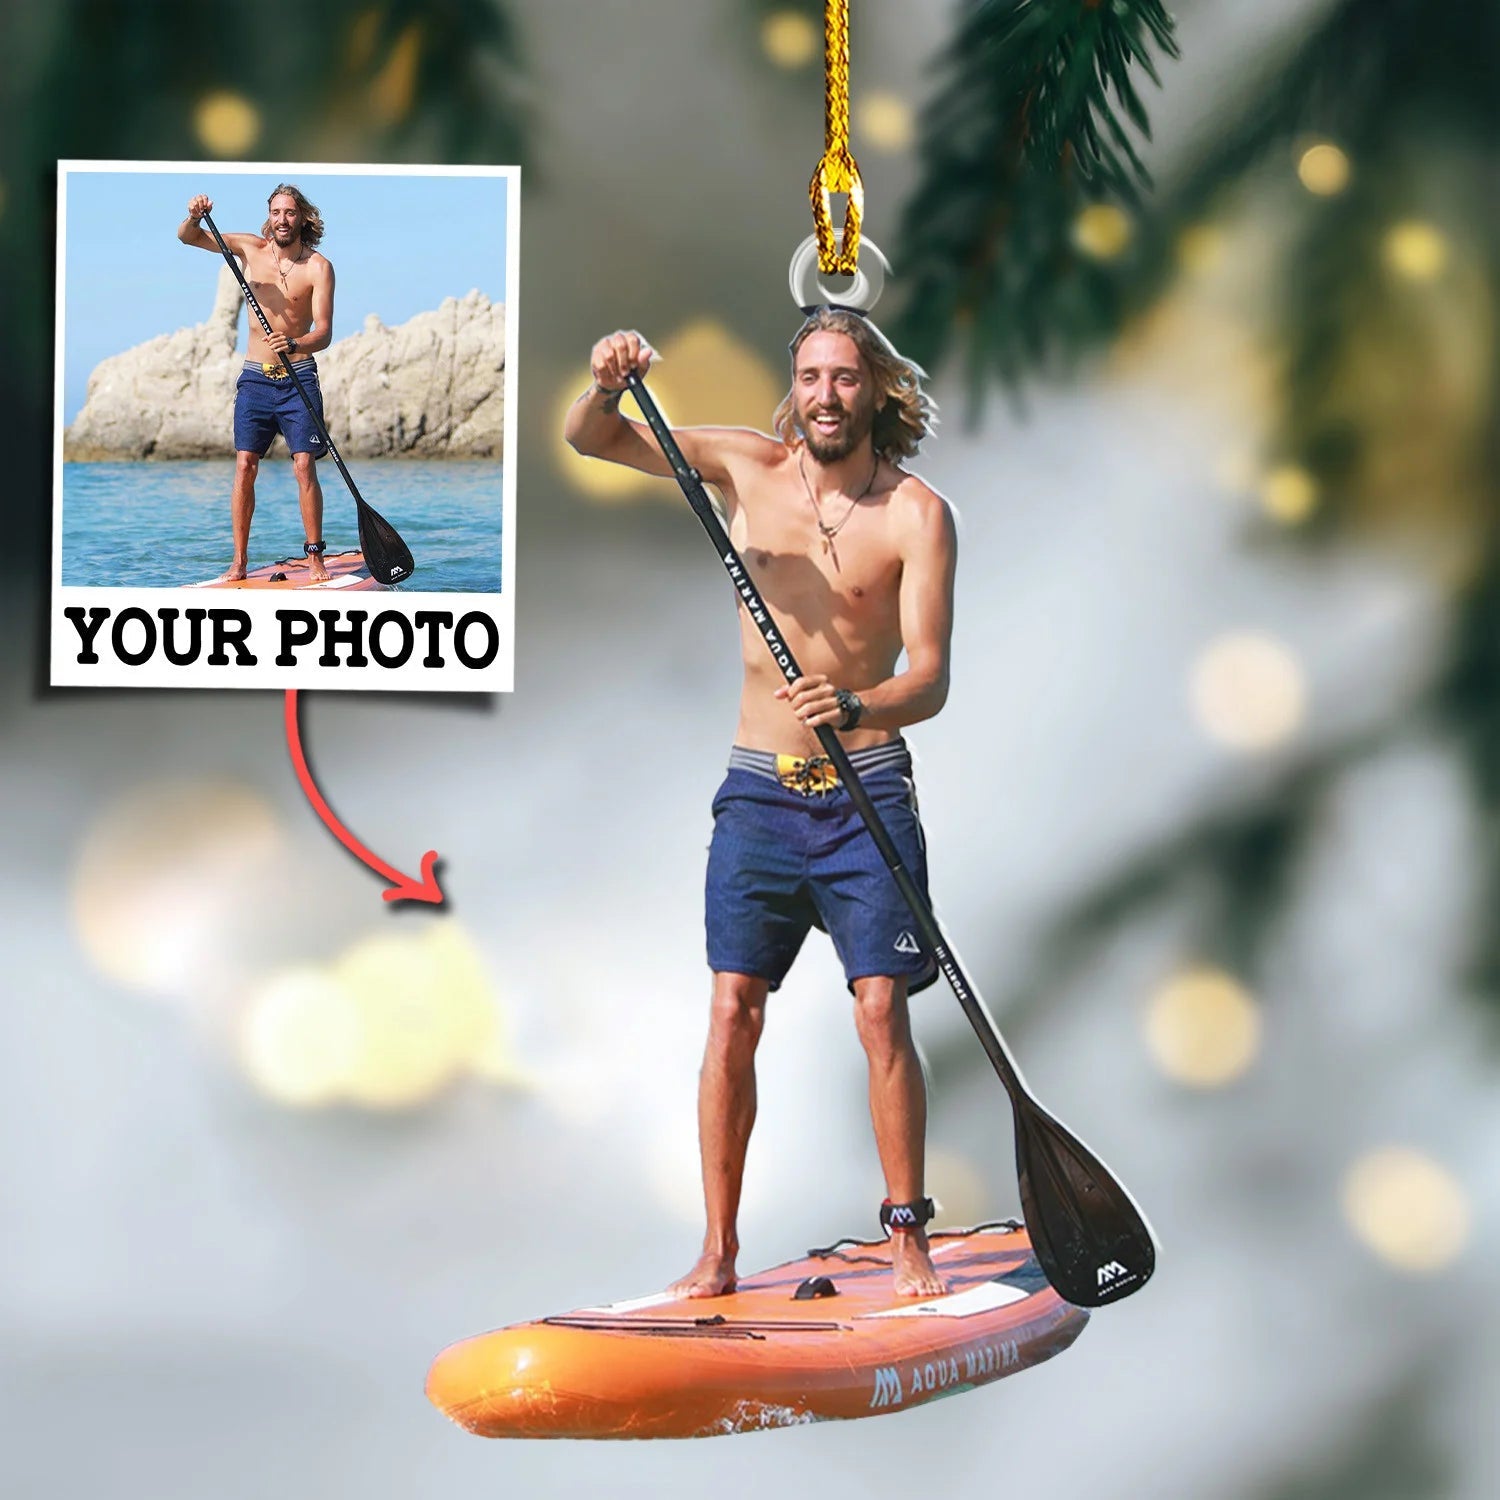 Custom Photo Ornament Gift For Player Surfboard - Personalized Photo Ornament Gift For Surfboard Lovers